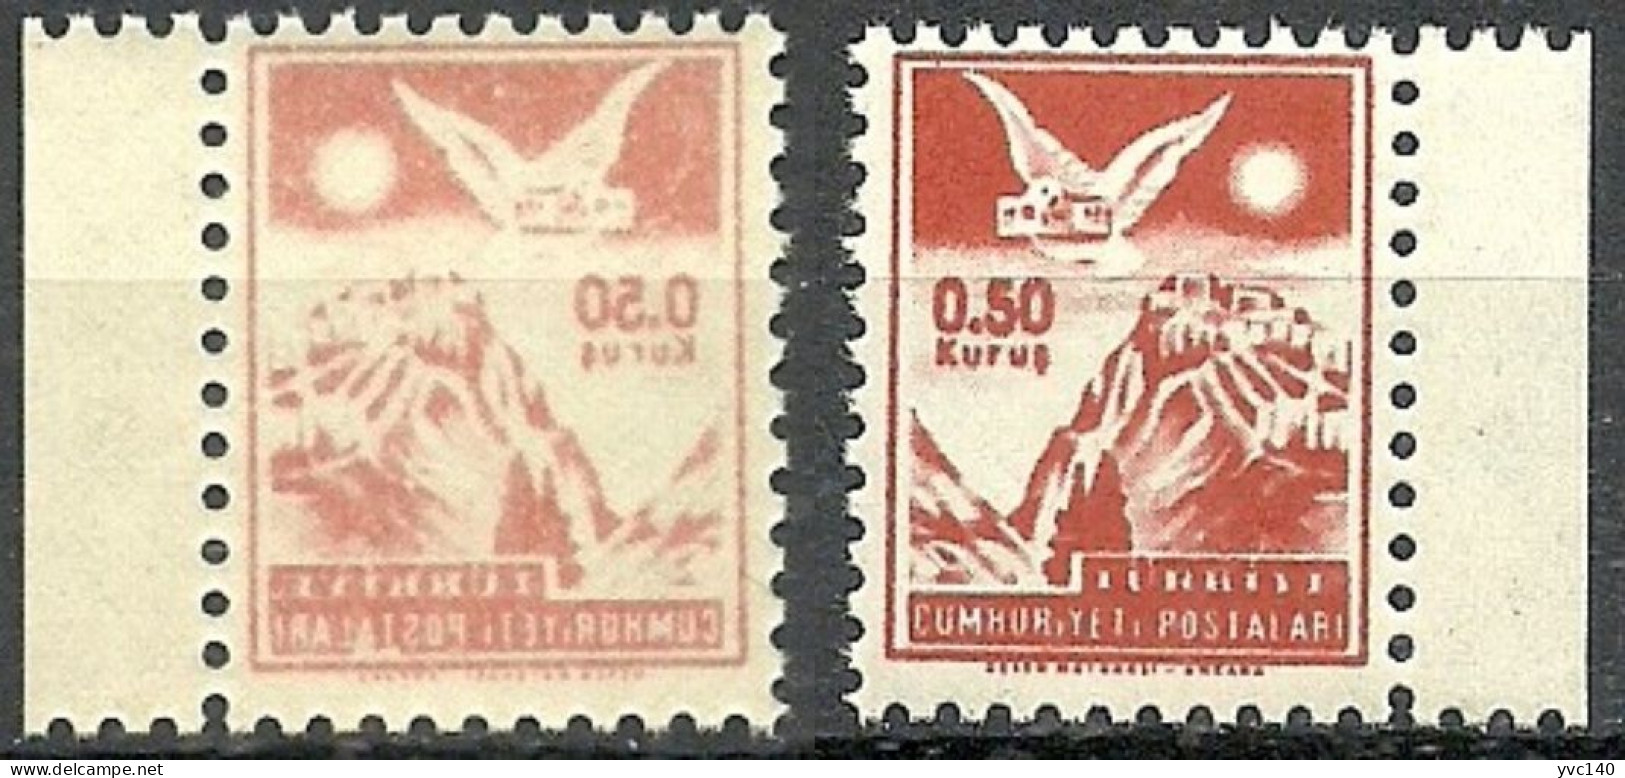 Turkey; 1954 "0.50 Kurus" Postage Stamp "Abklatsch Print" - Nuovi